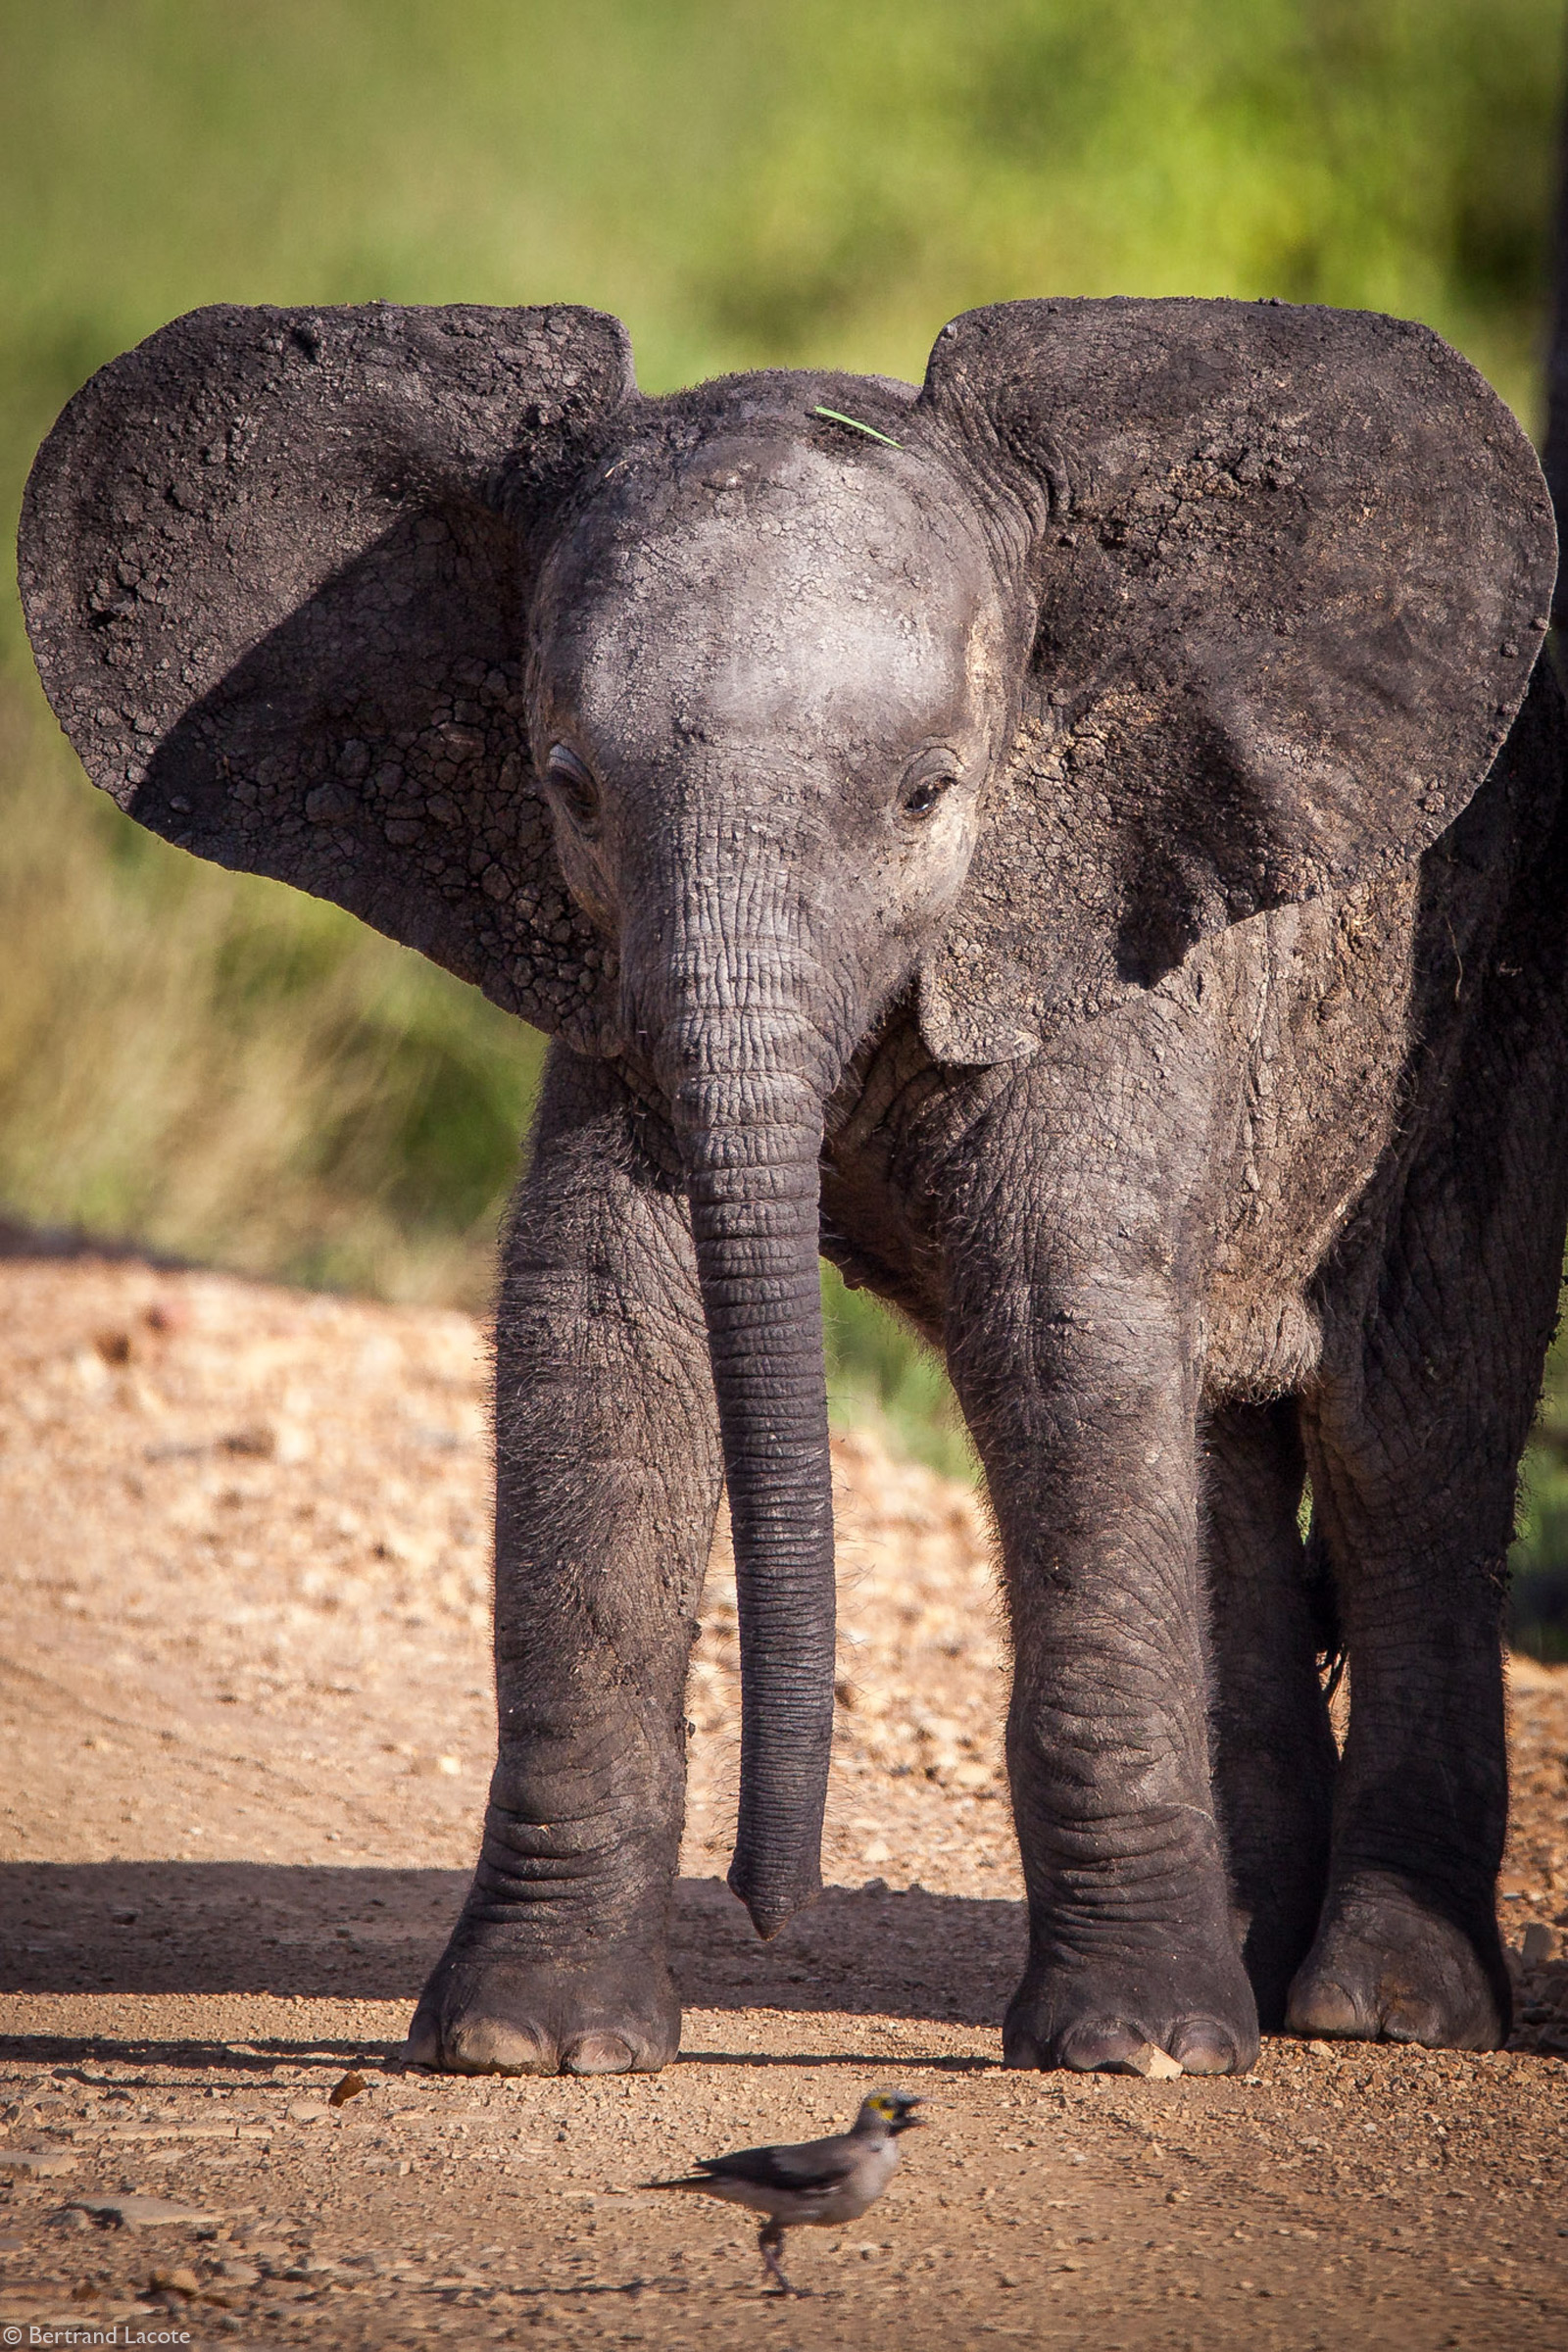 Bertrand-Lacote-elephant-calf-Selous-Game-Reserve-Tanzania - Africa ...